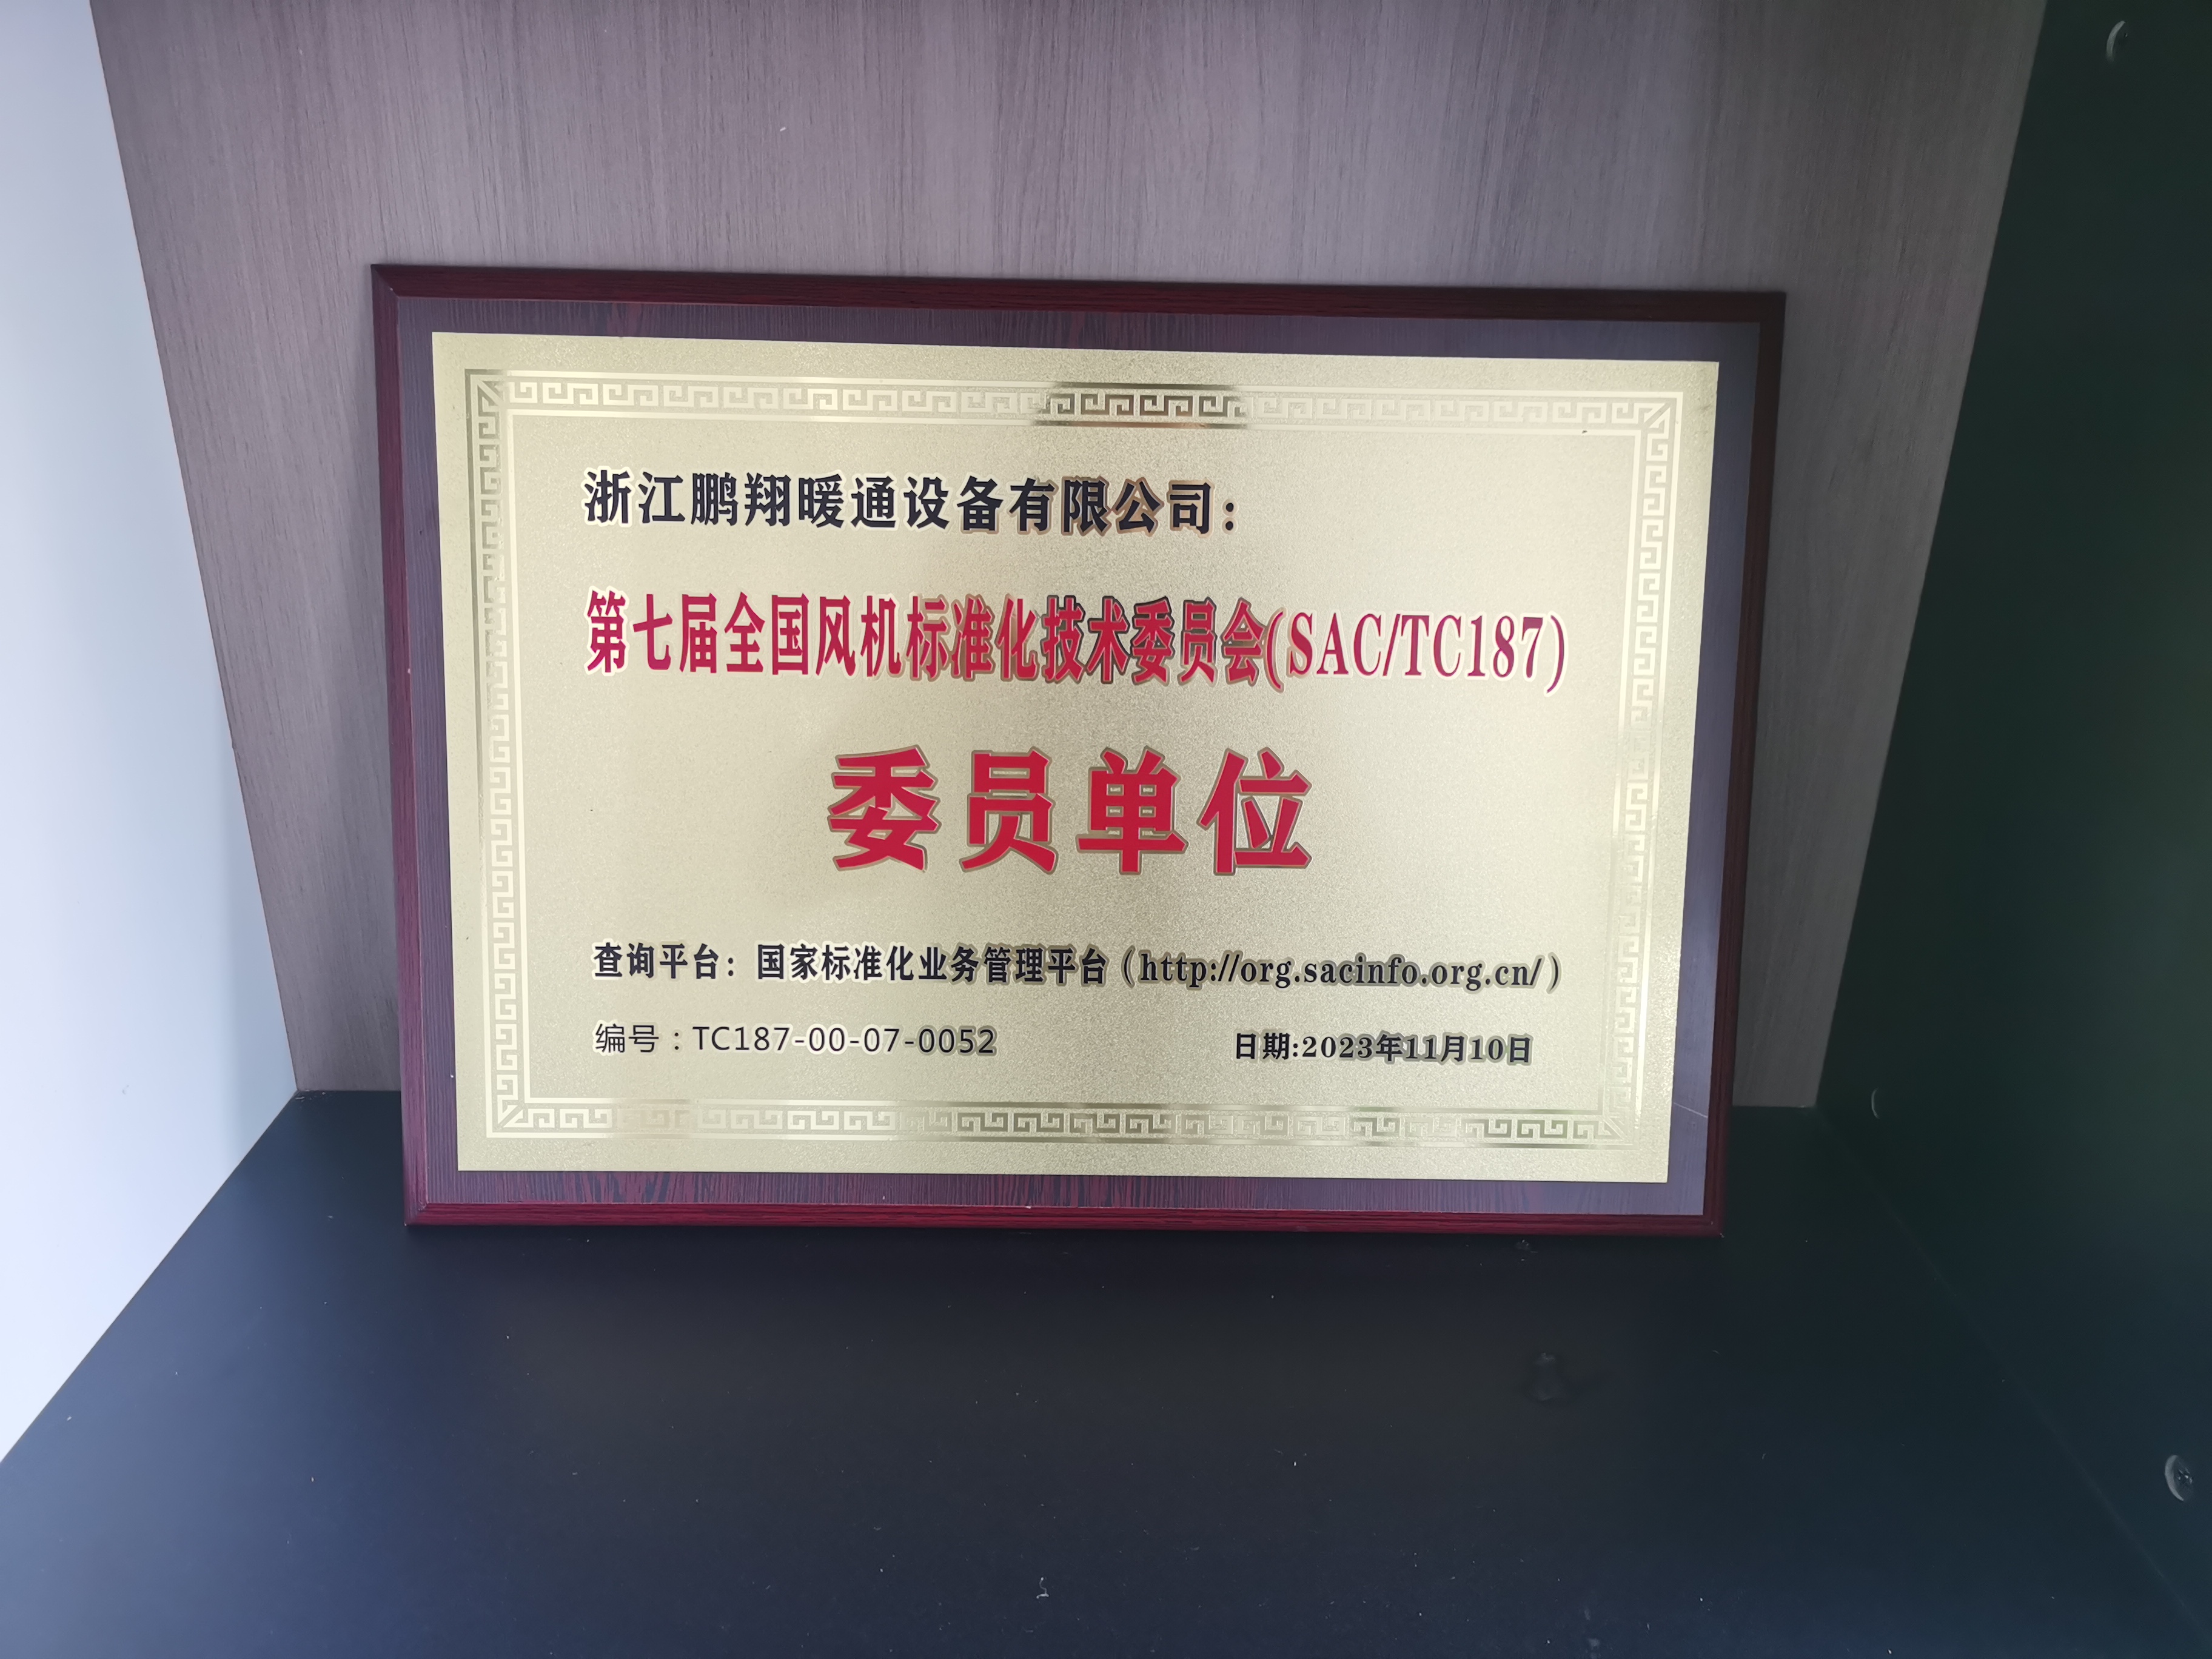 VALMET Paper Machinery Technology Team jout heechste wurdearring oan Zhejiang Pengxiang HVAC Equipment Co., Ltd.